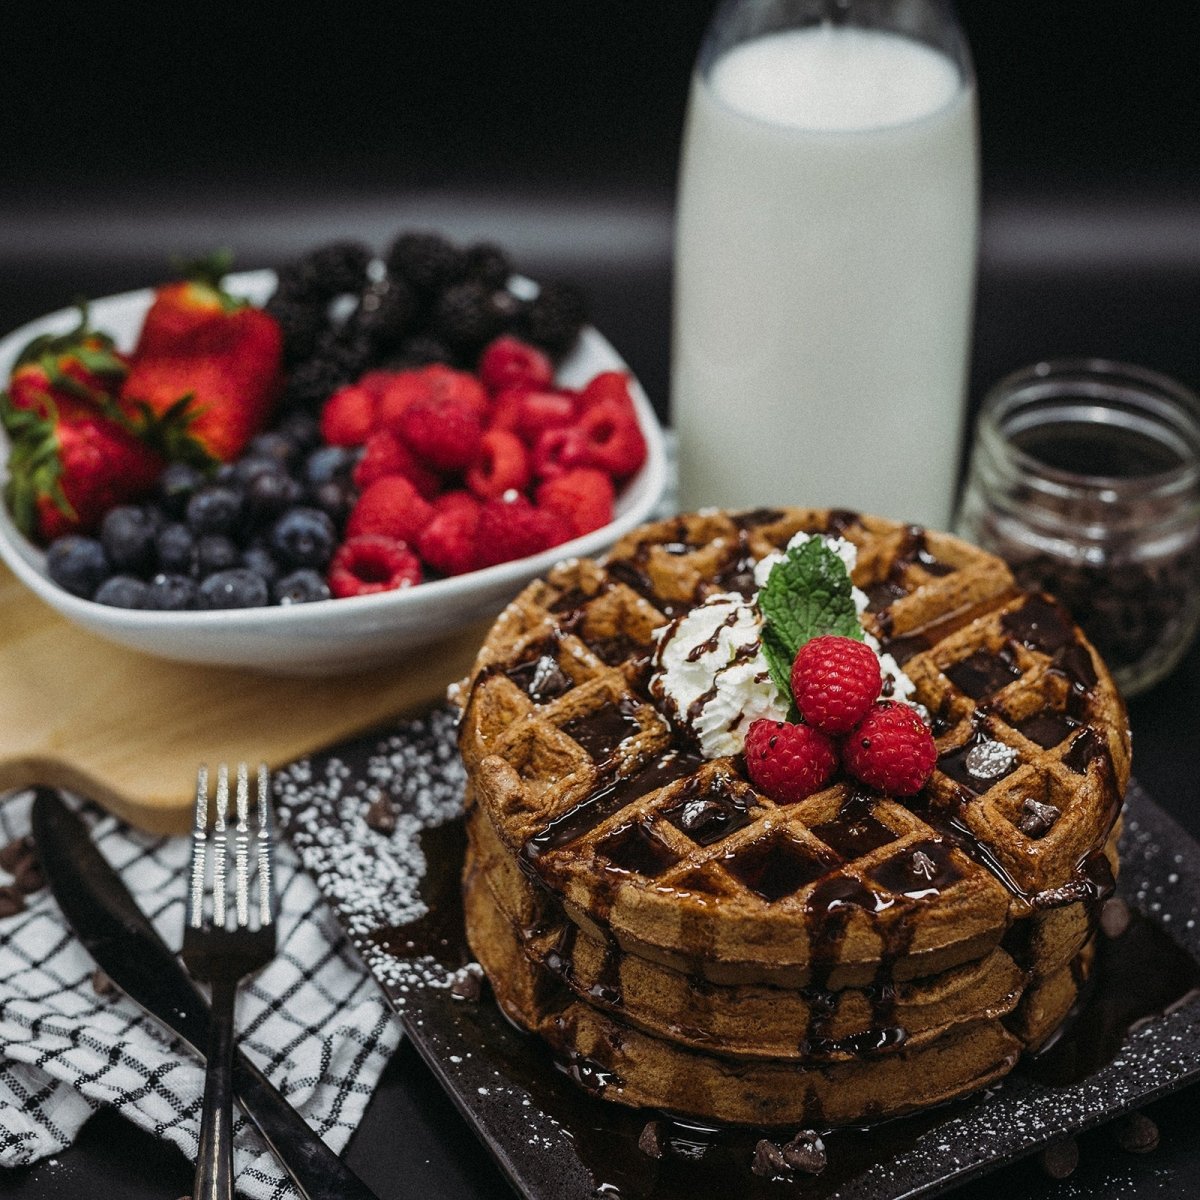 Chocolate Protein Pancake & Waffle Mix - ProDough Protein Bakeshop